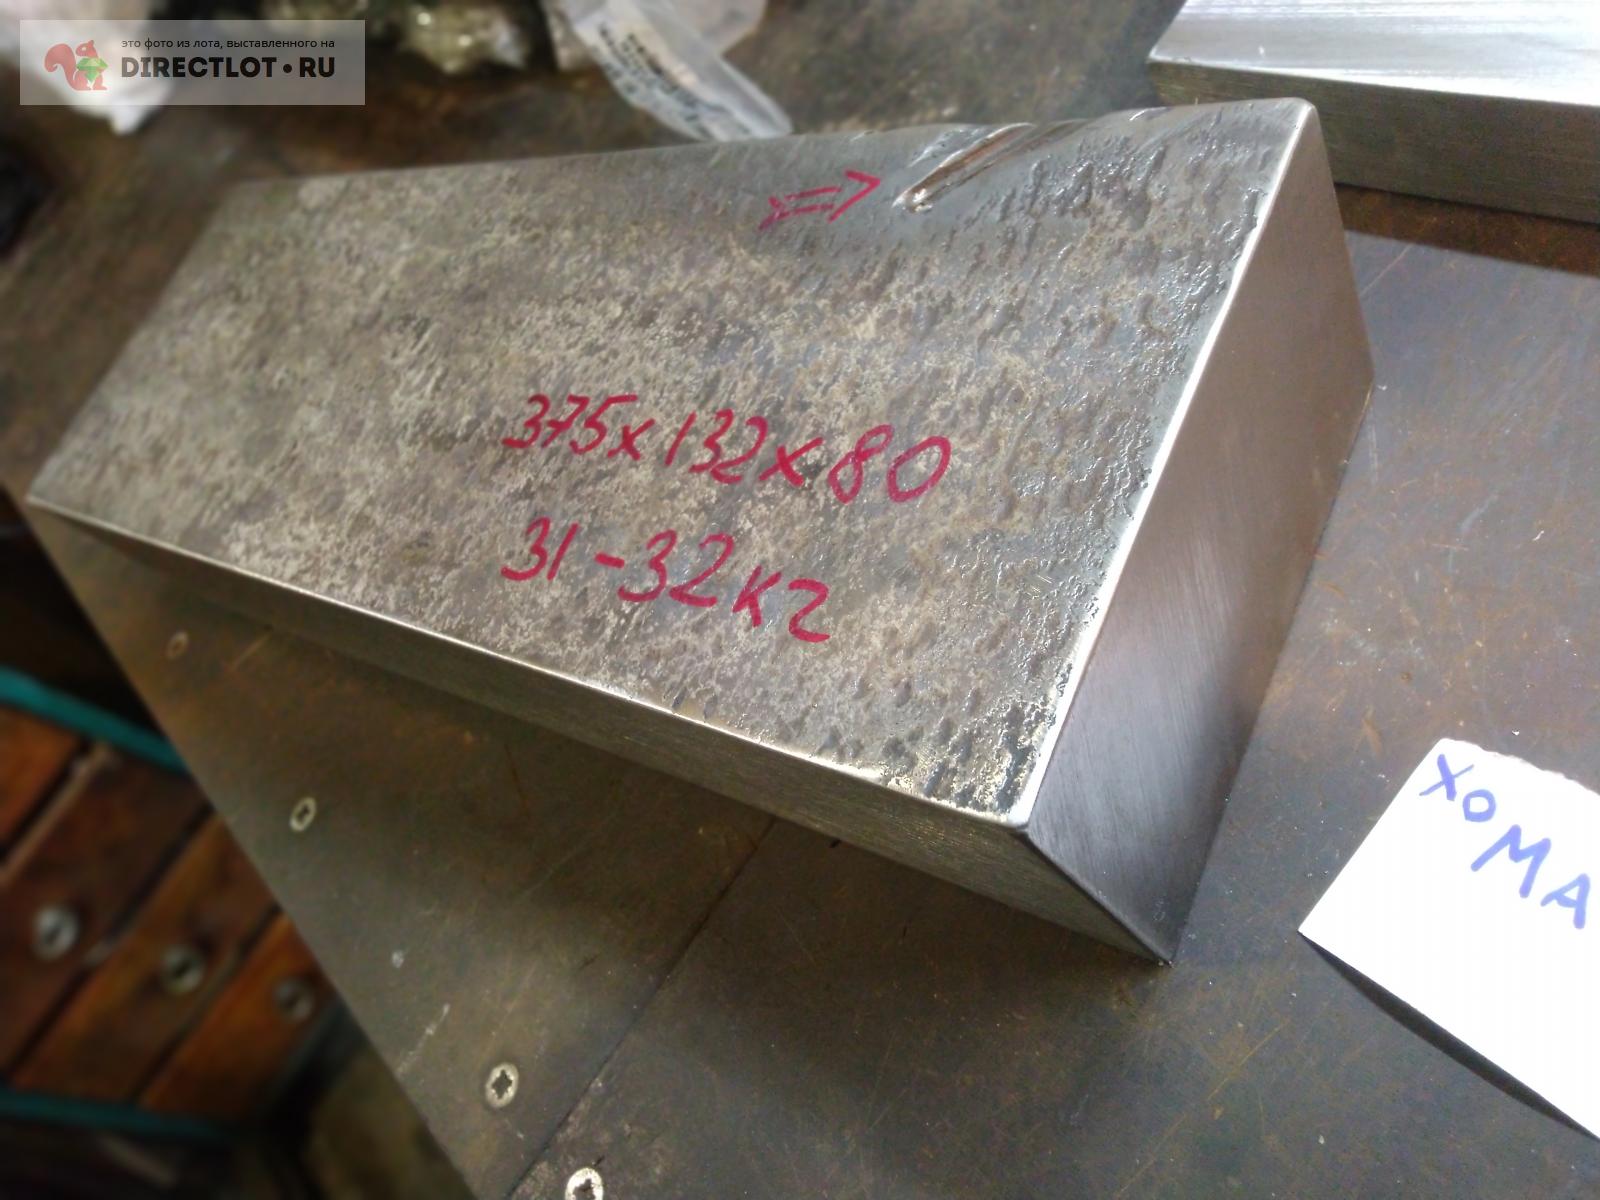 Плита стальная 375х132х80  в Череповеце цена 2000 Р на DIRECTLOT .